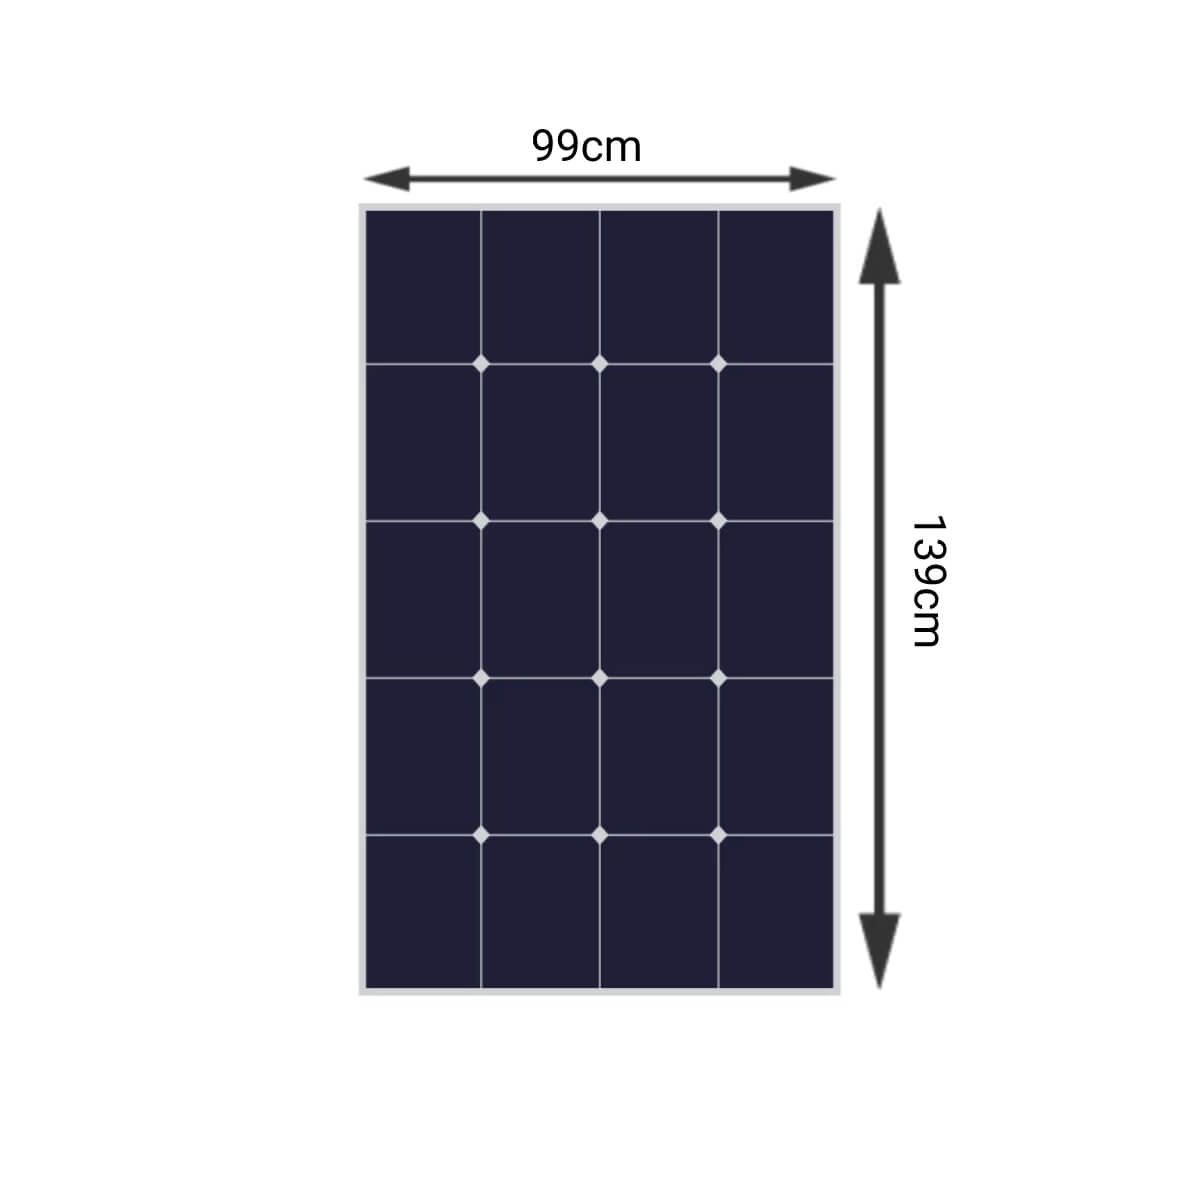 500W Solar Panel Kit – 2x 250W dimensions